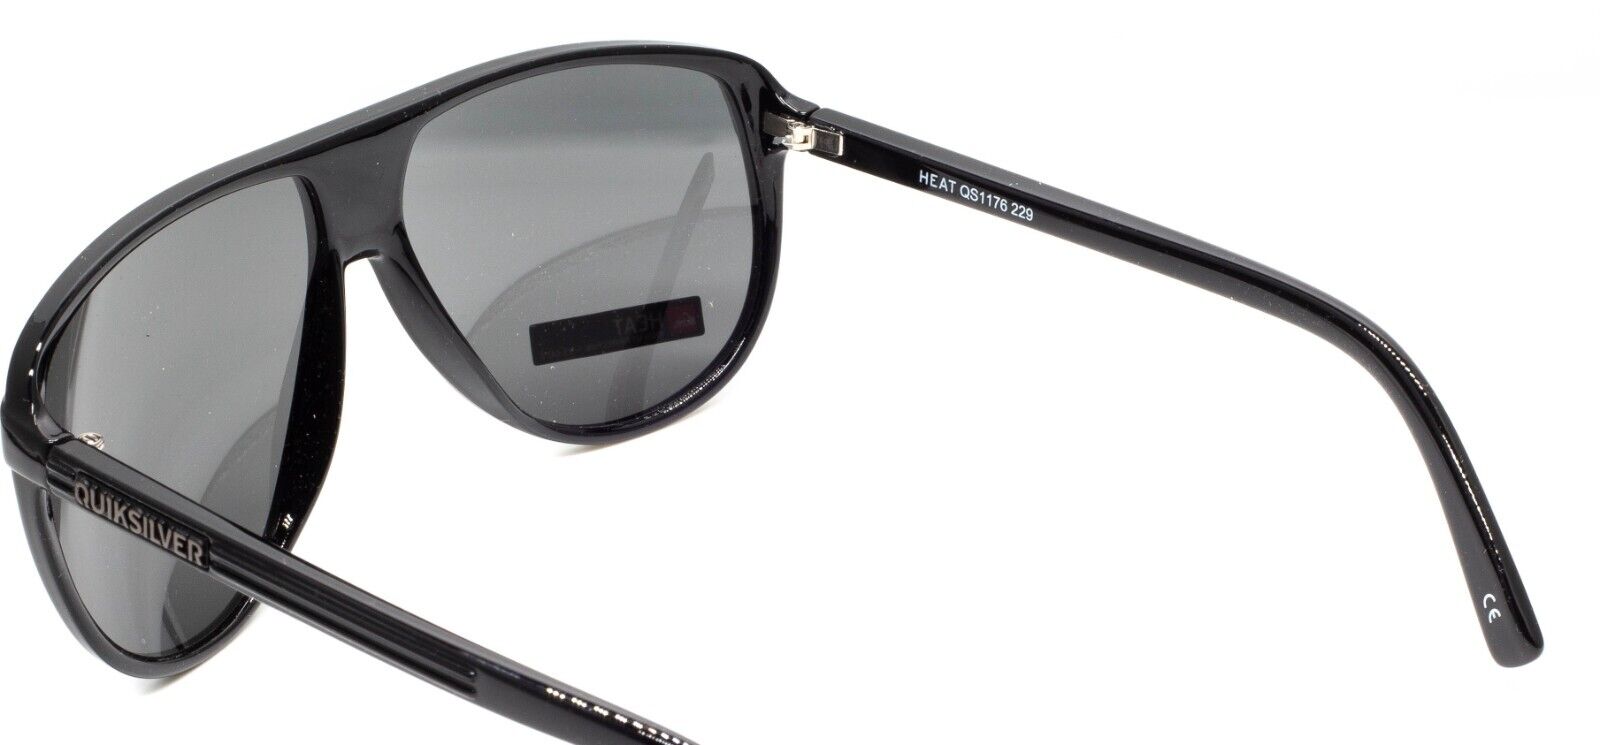 HEAT Sunglasses QS1176 4231441 229 Eyewear Glasses 59mm - Eyewear QUIKSILVER -Italy Shades GGV